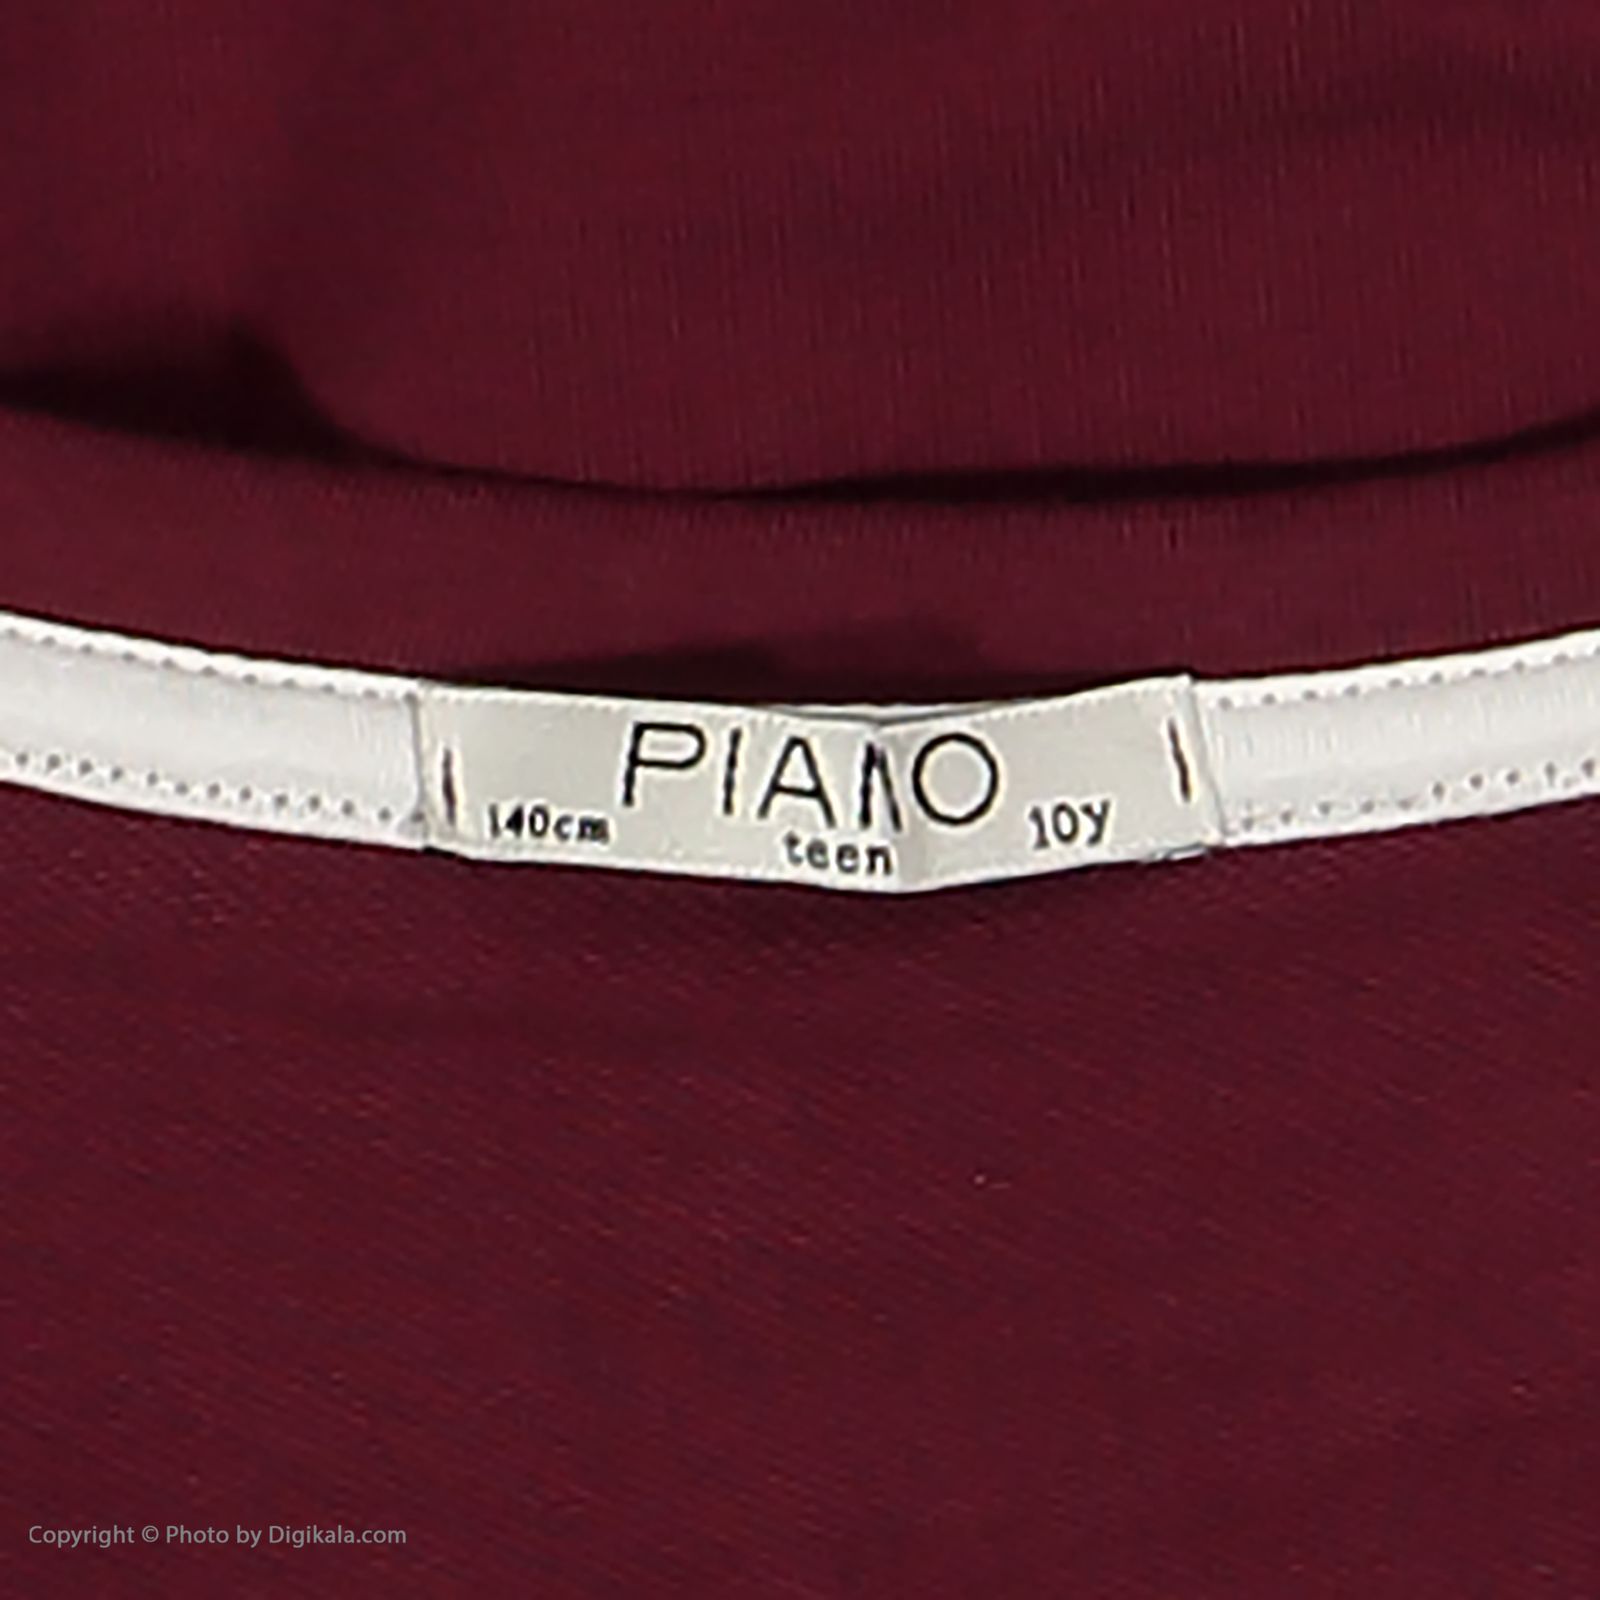 سویشرت دخترانه پیانو مدل 1009009901643-70 -  - 5